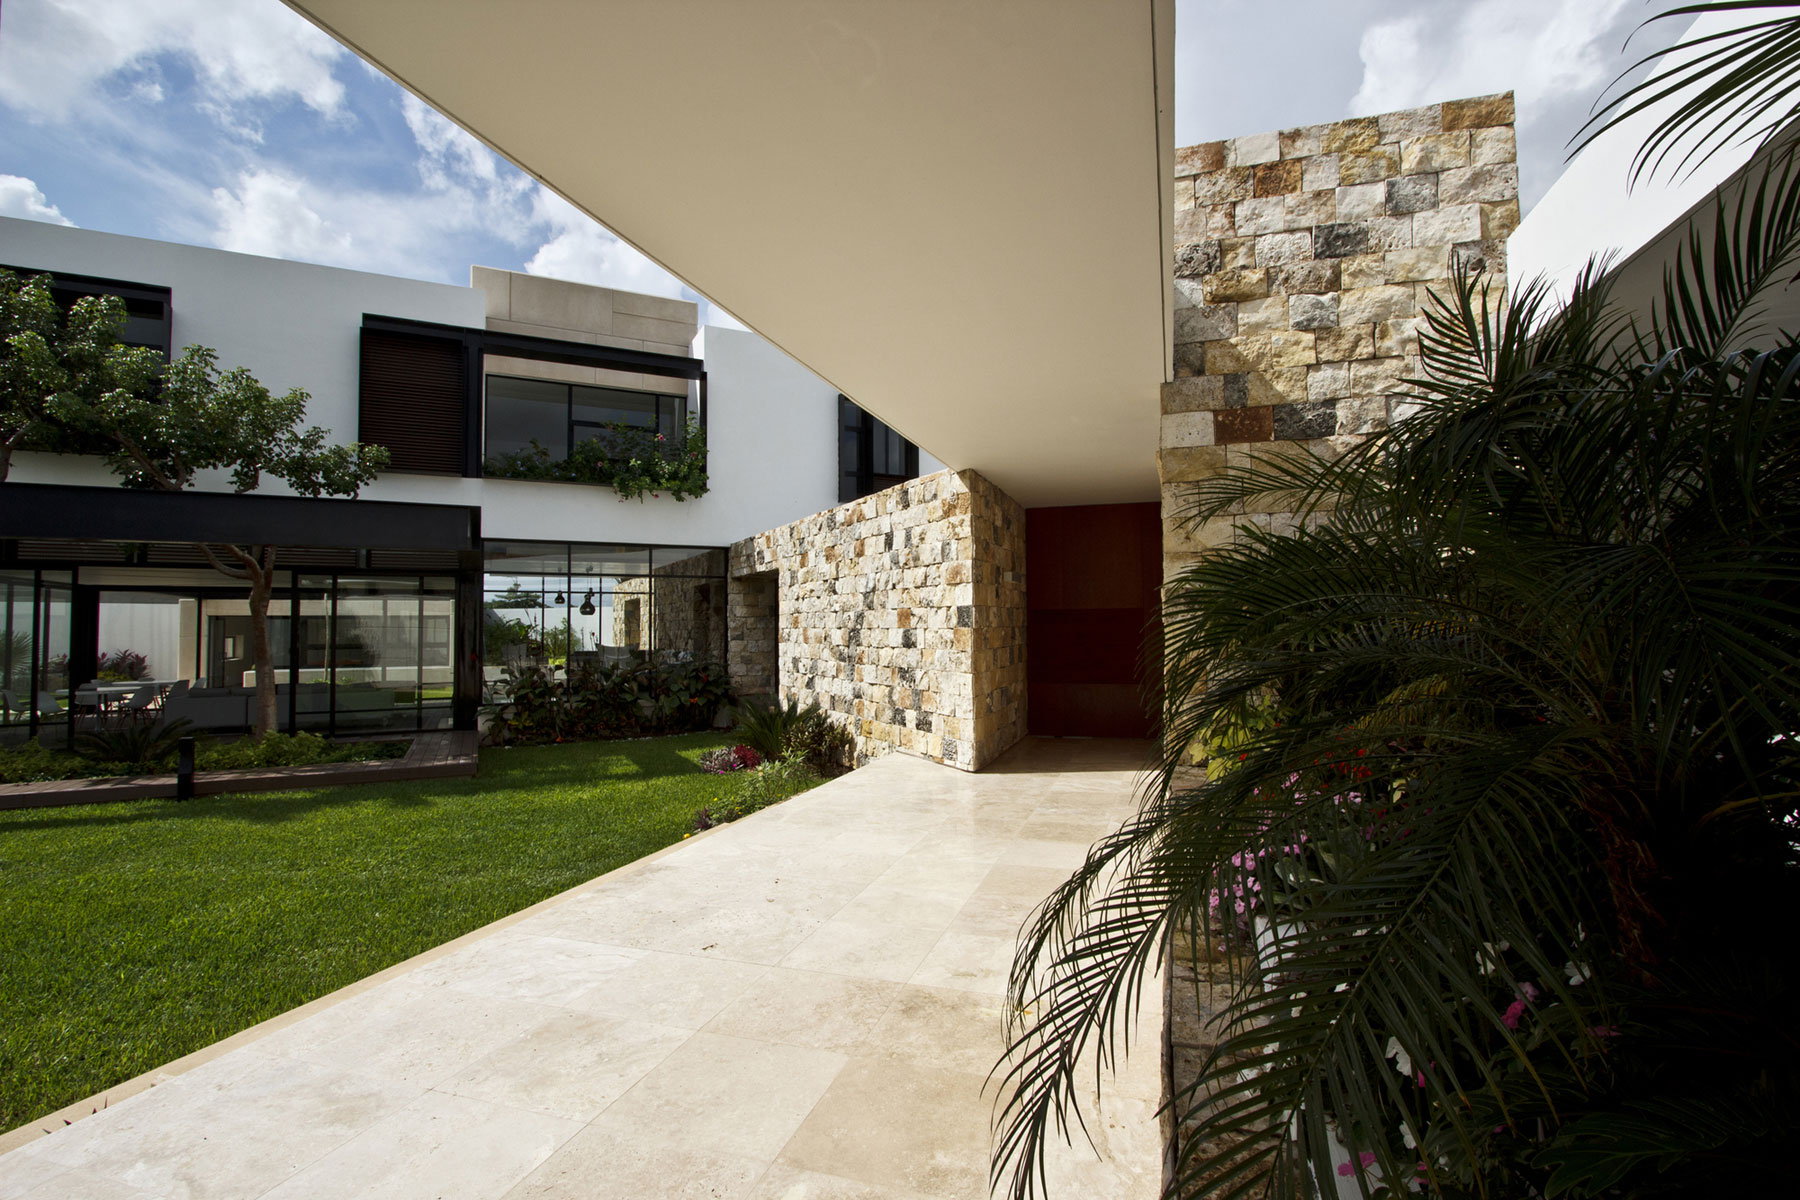 Temozón House By Carrillo Arquitectos y Asociados